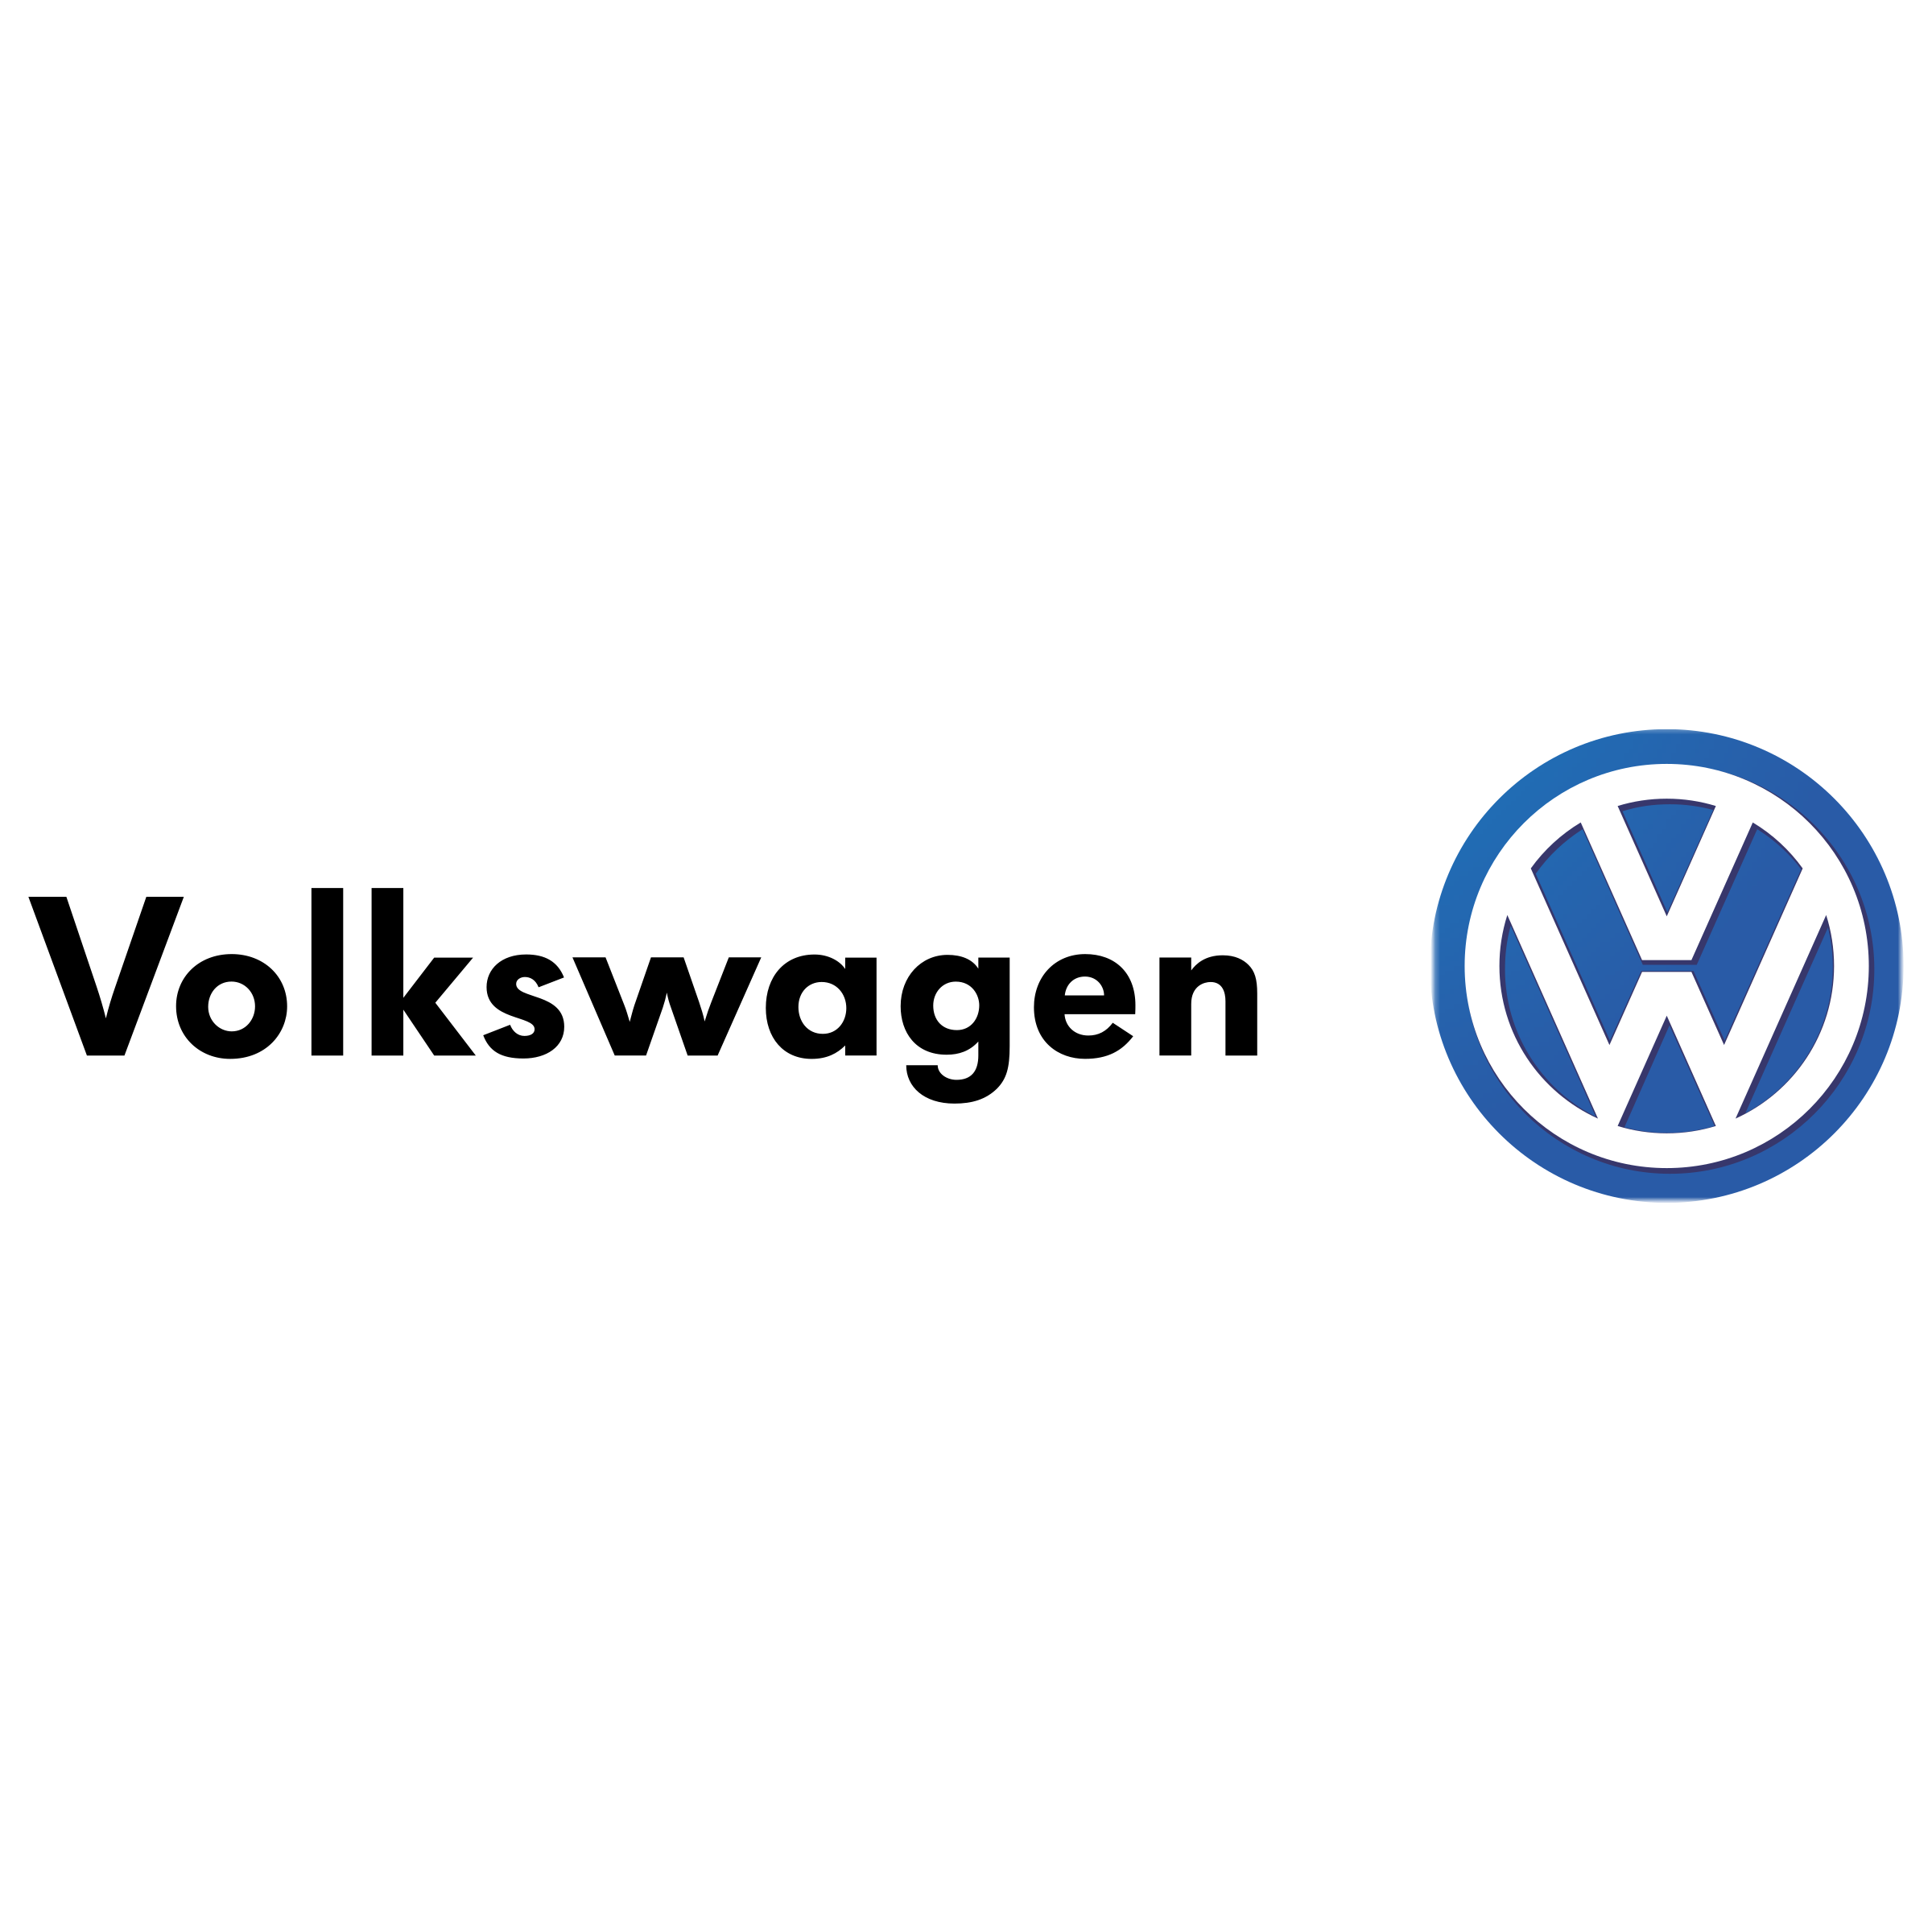 volkswagen 6 logo png transparent - Tableau de bord management